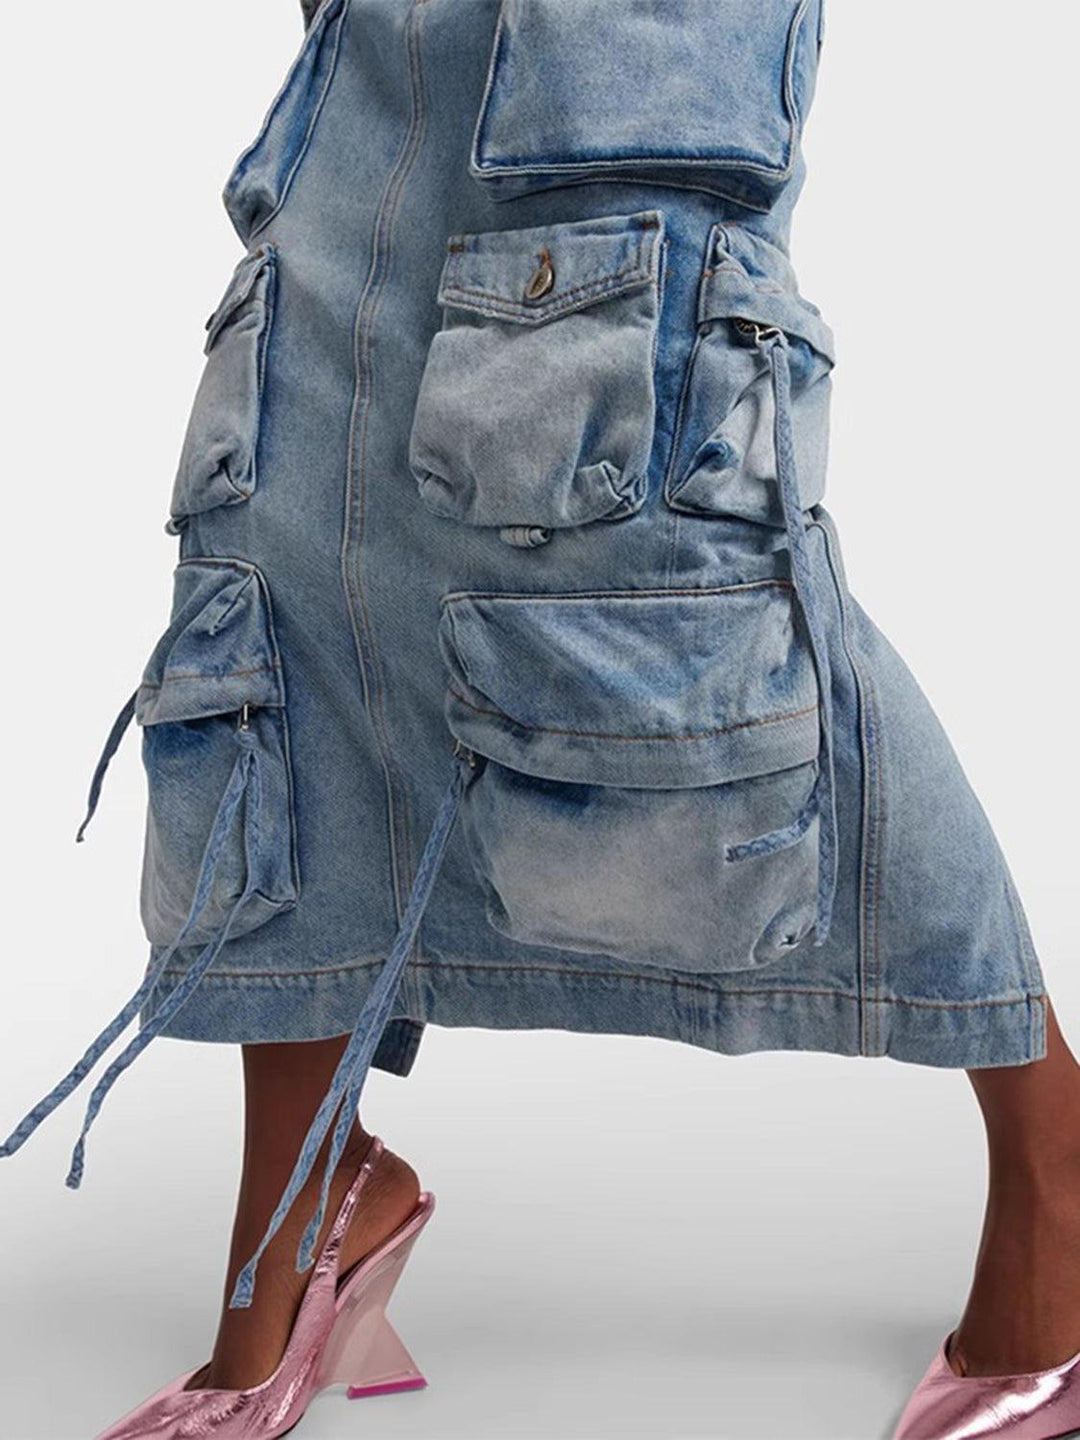 Slit Midi Denim Skirt with Pockets - Lucianne Boutique